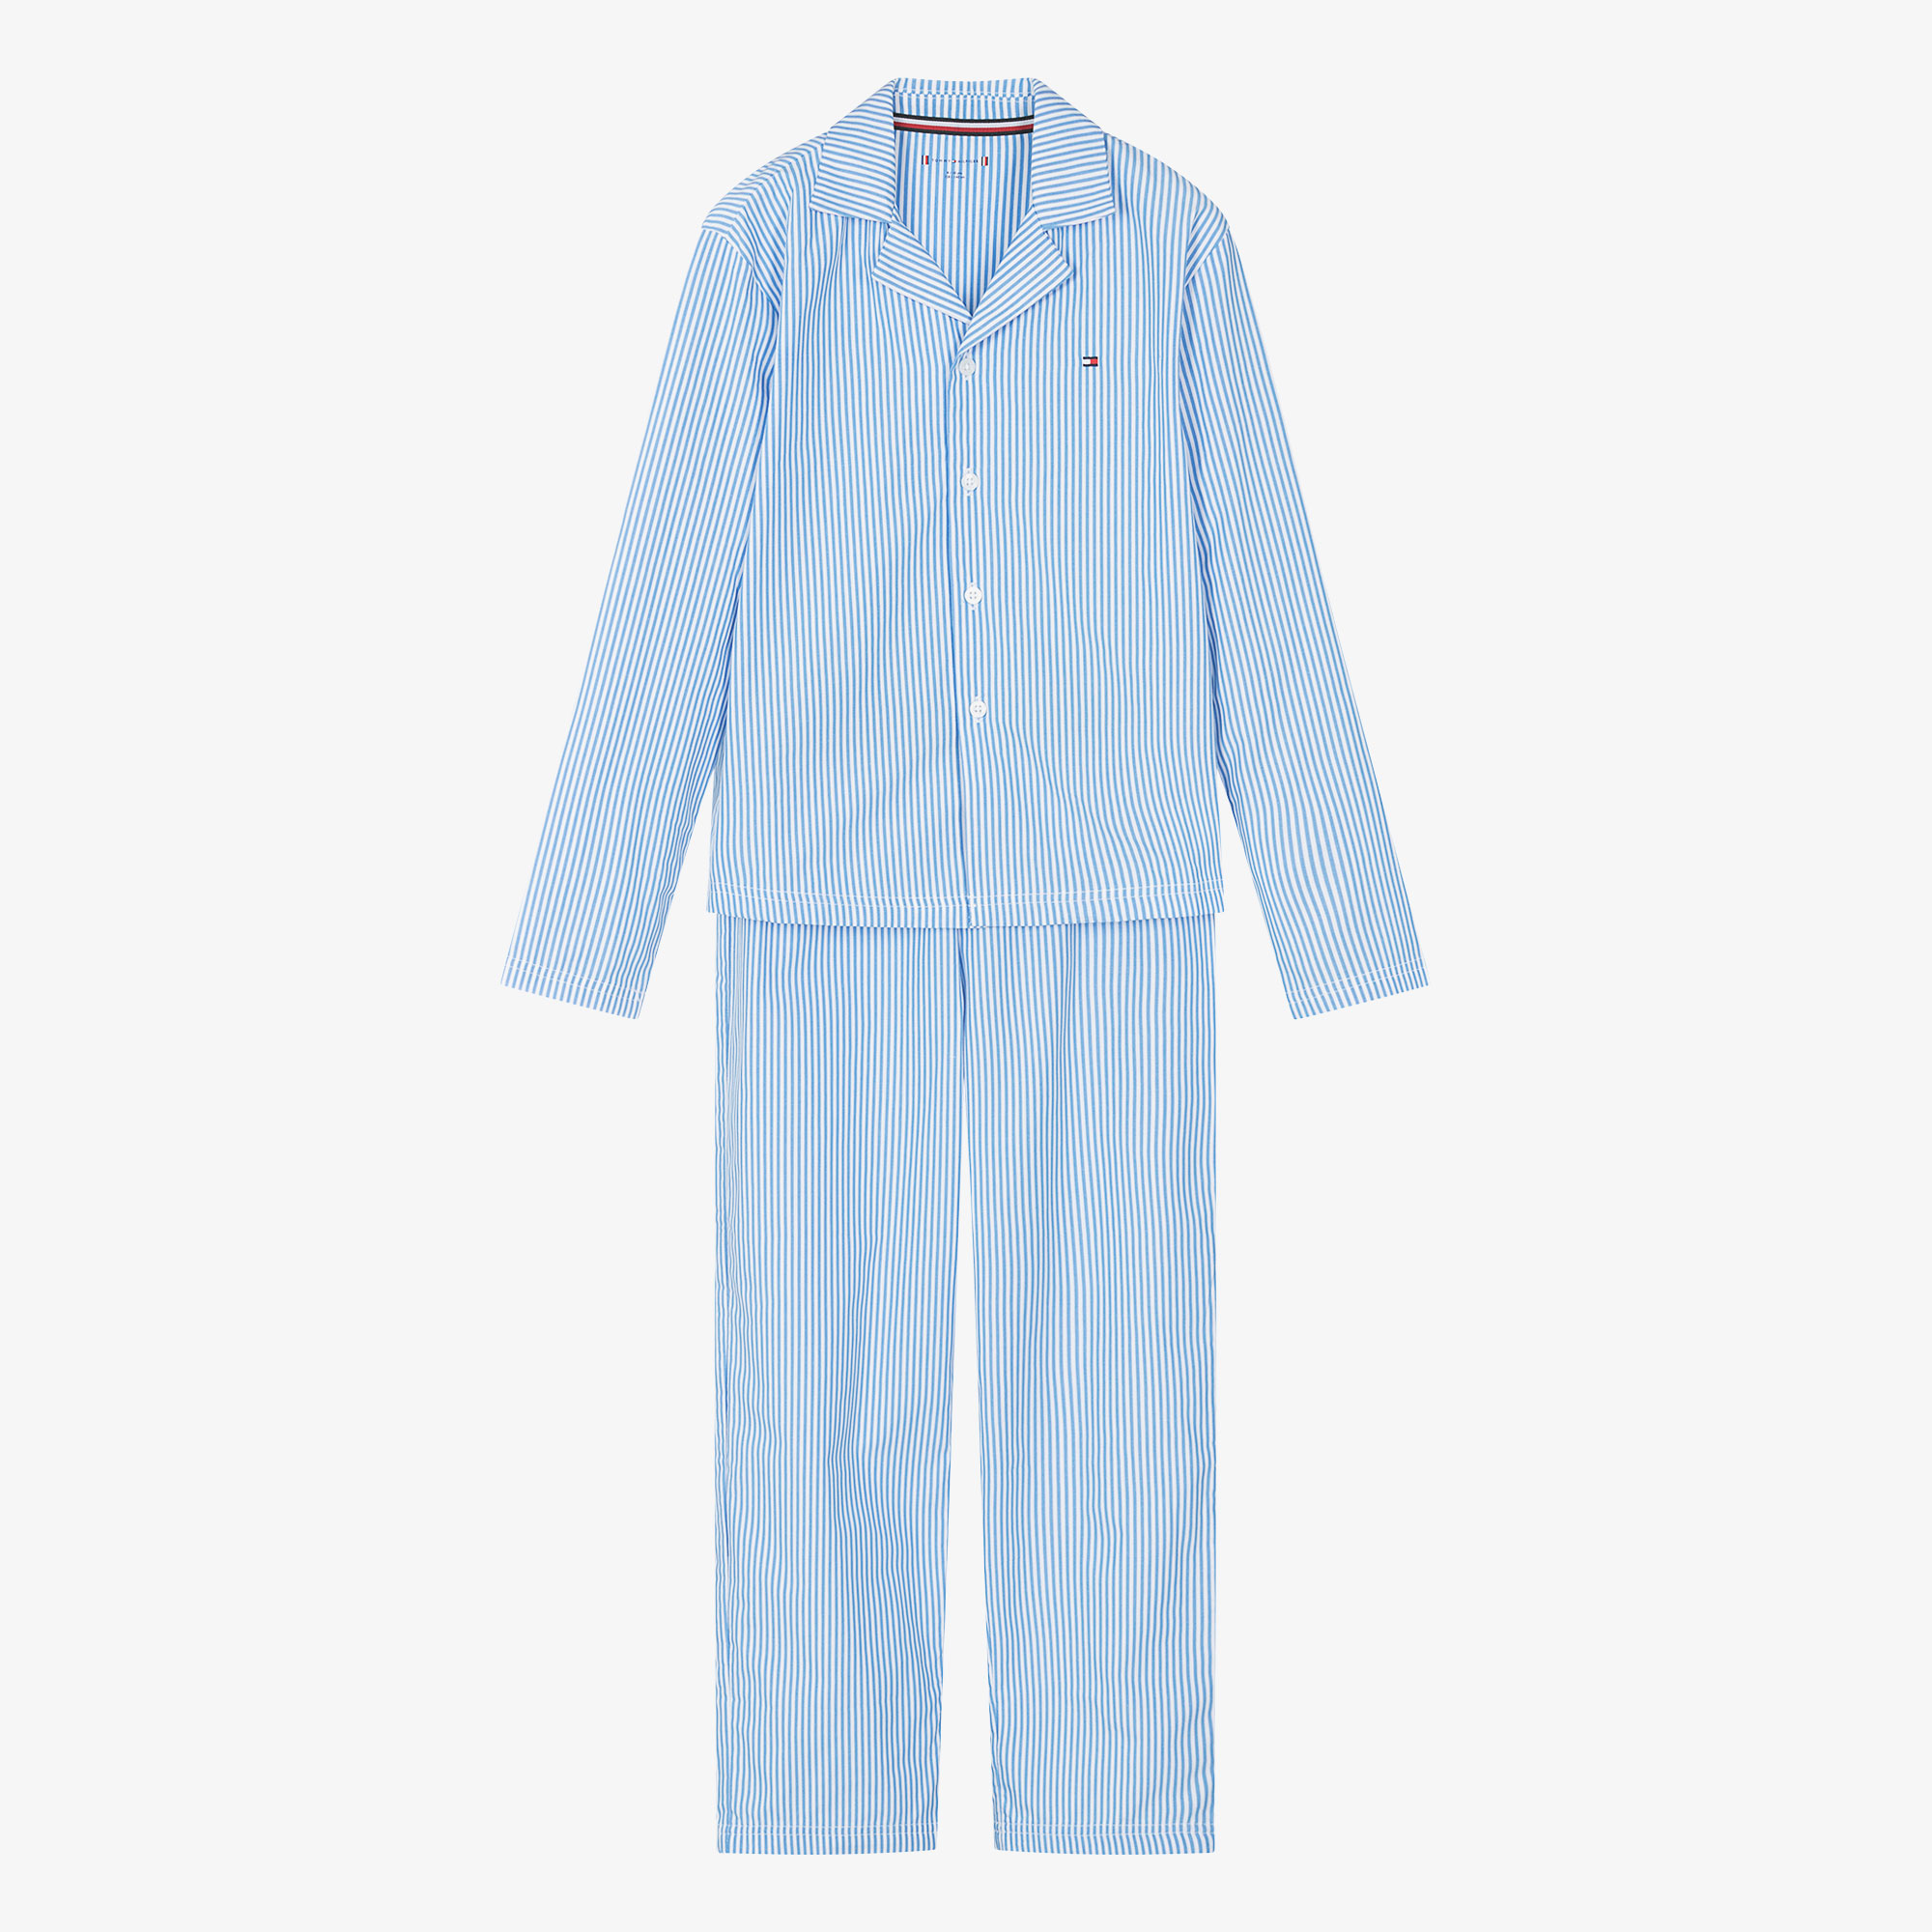 Louis Blue & White Striped Children's Pyjamas